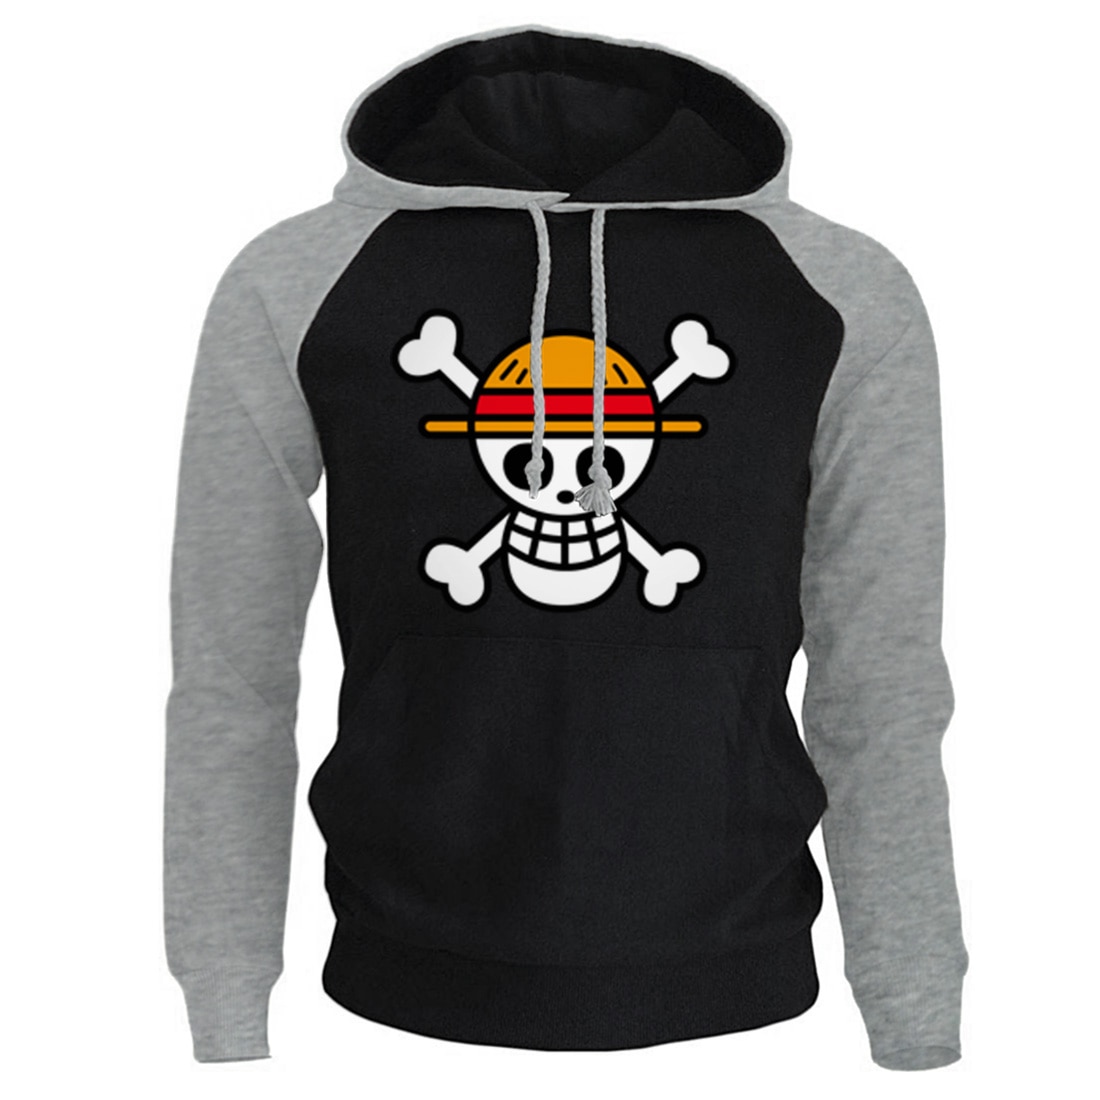 One Piece – Pirate Logo Hoodies and Sweatshirts (4 colors) Hoodies & Sweatshirts